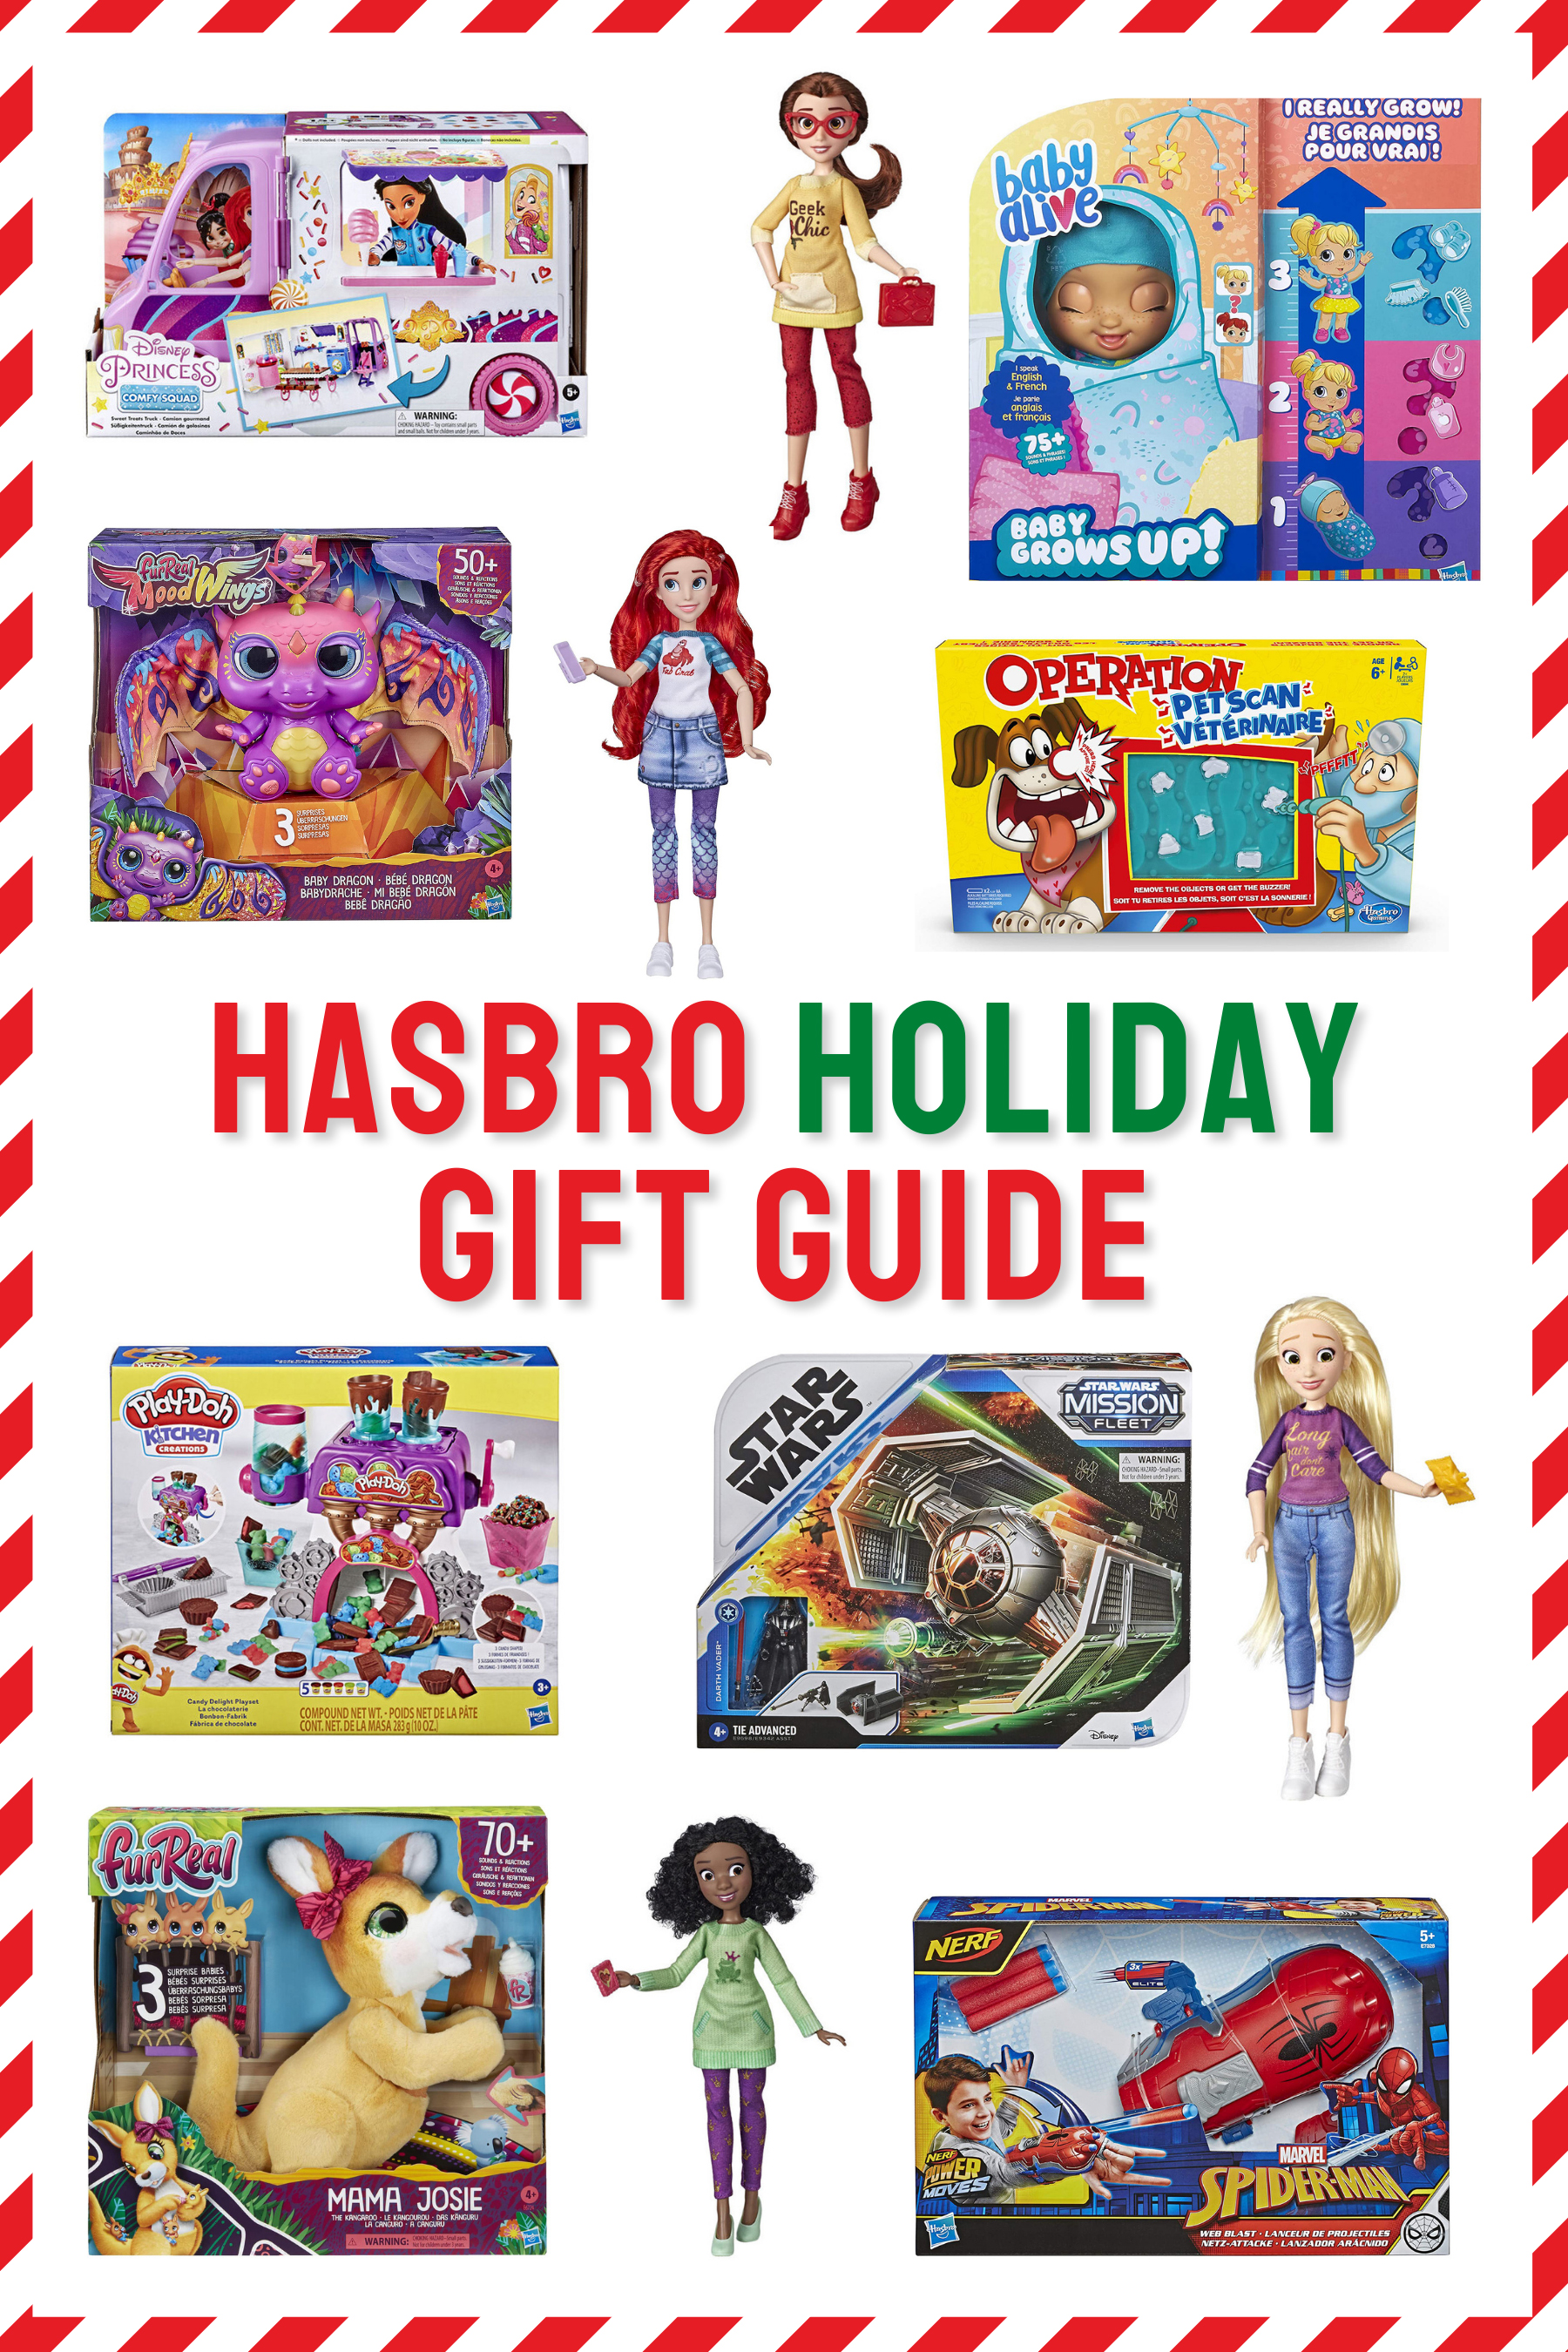 Hasbro Holiday Gift Guide 2020